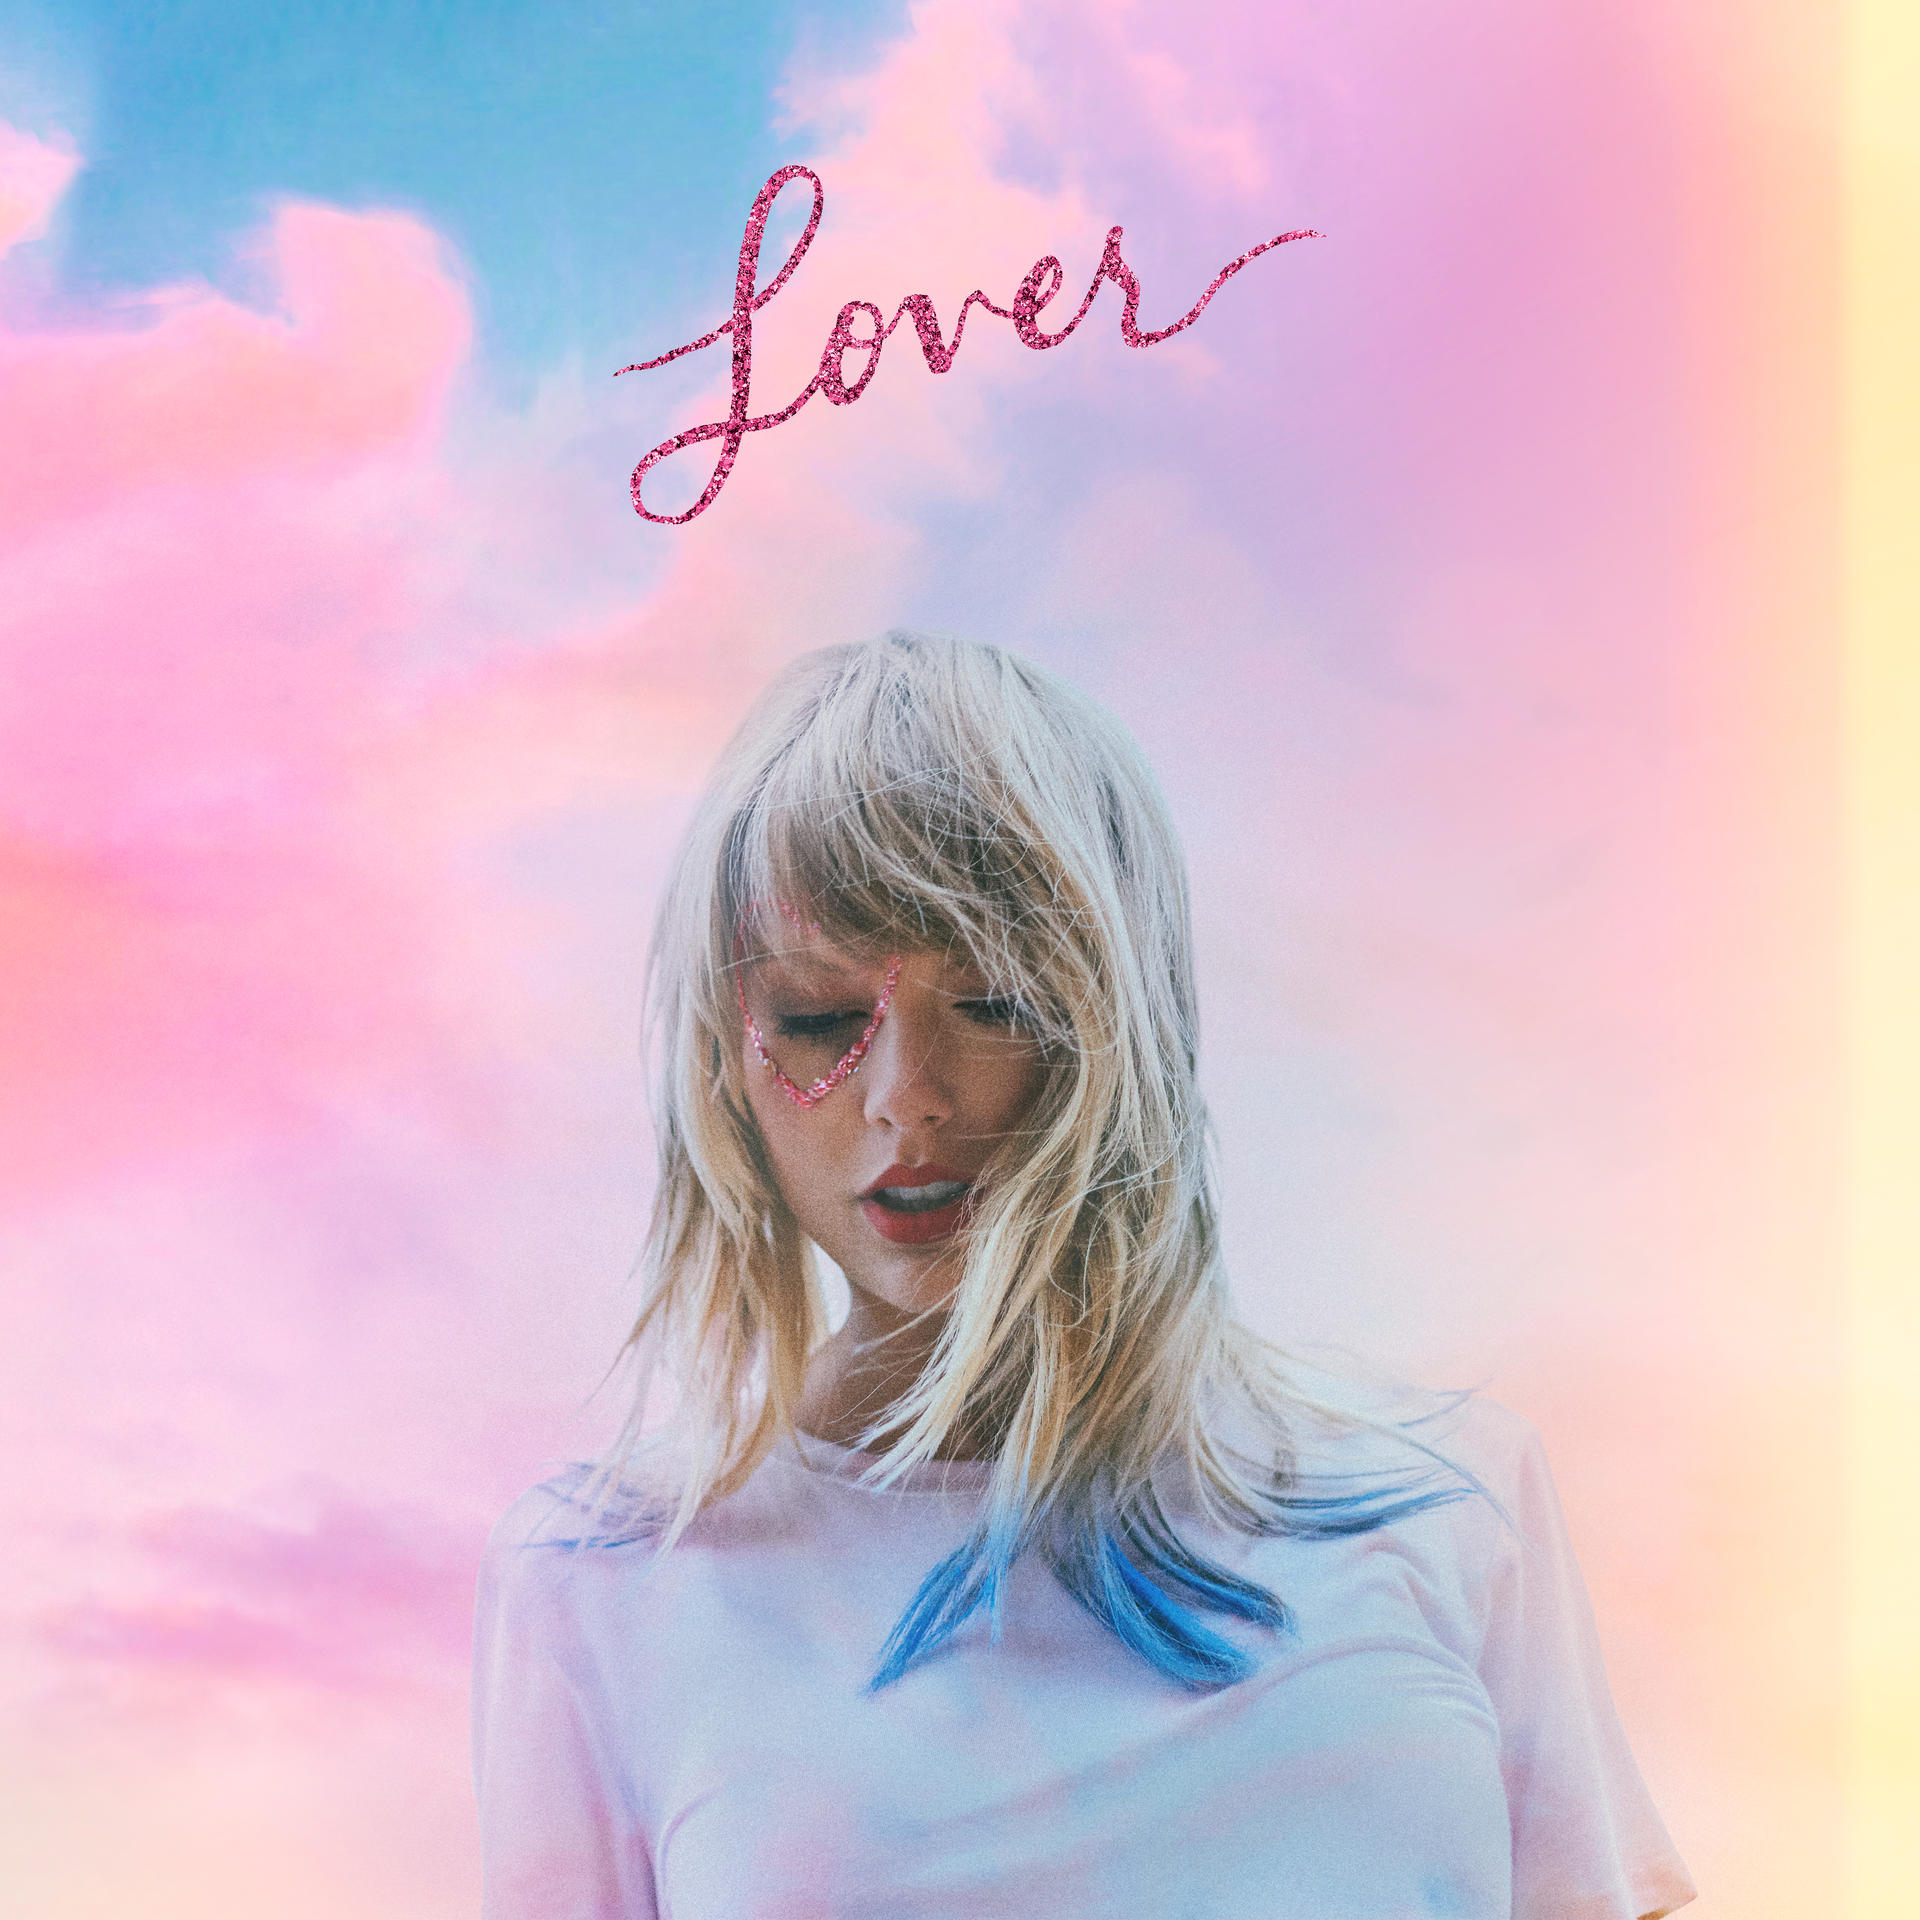 Taylor Swift Lover - (Standard) - (CD)